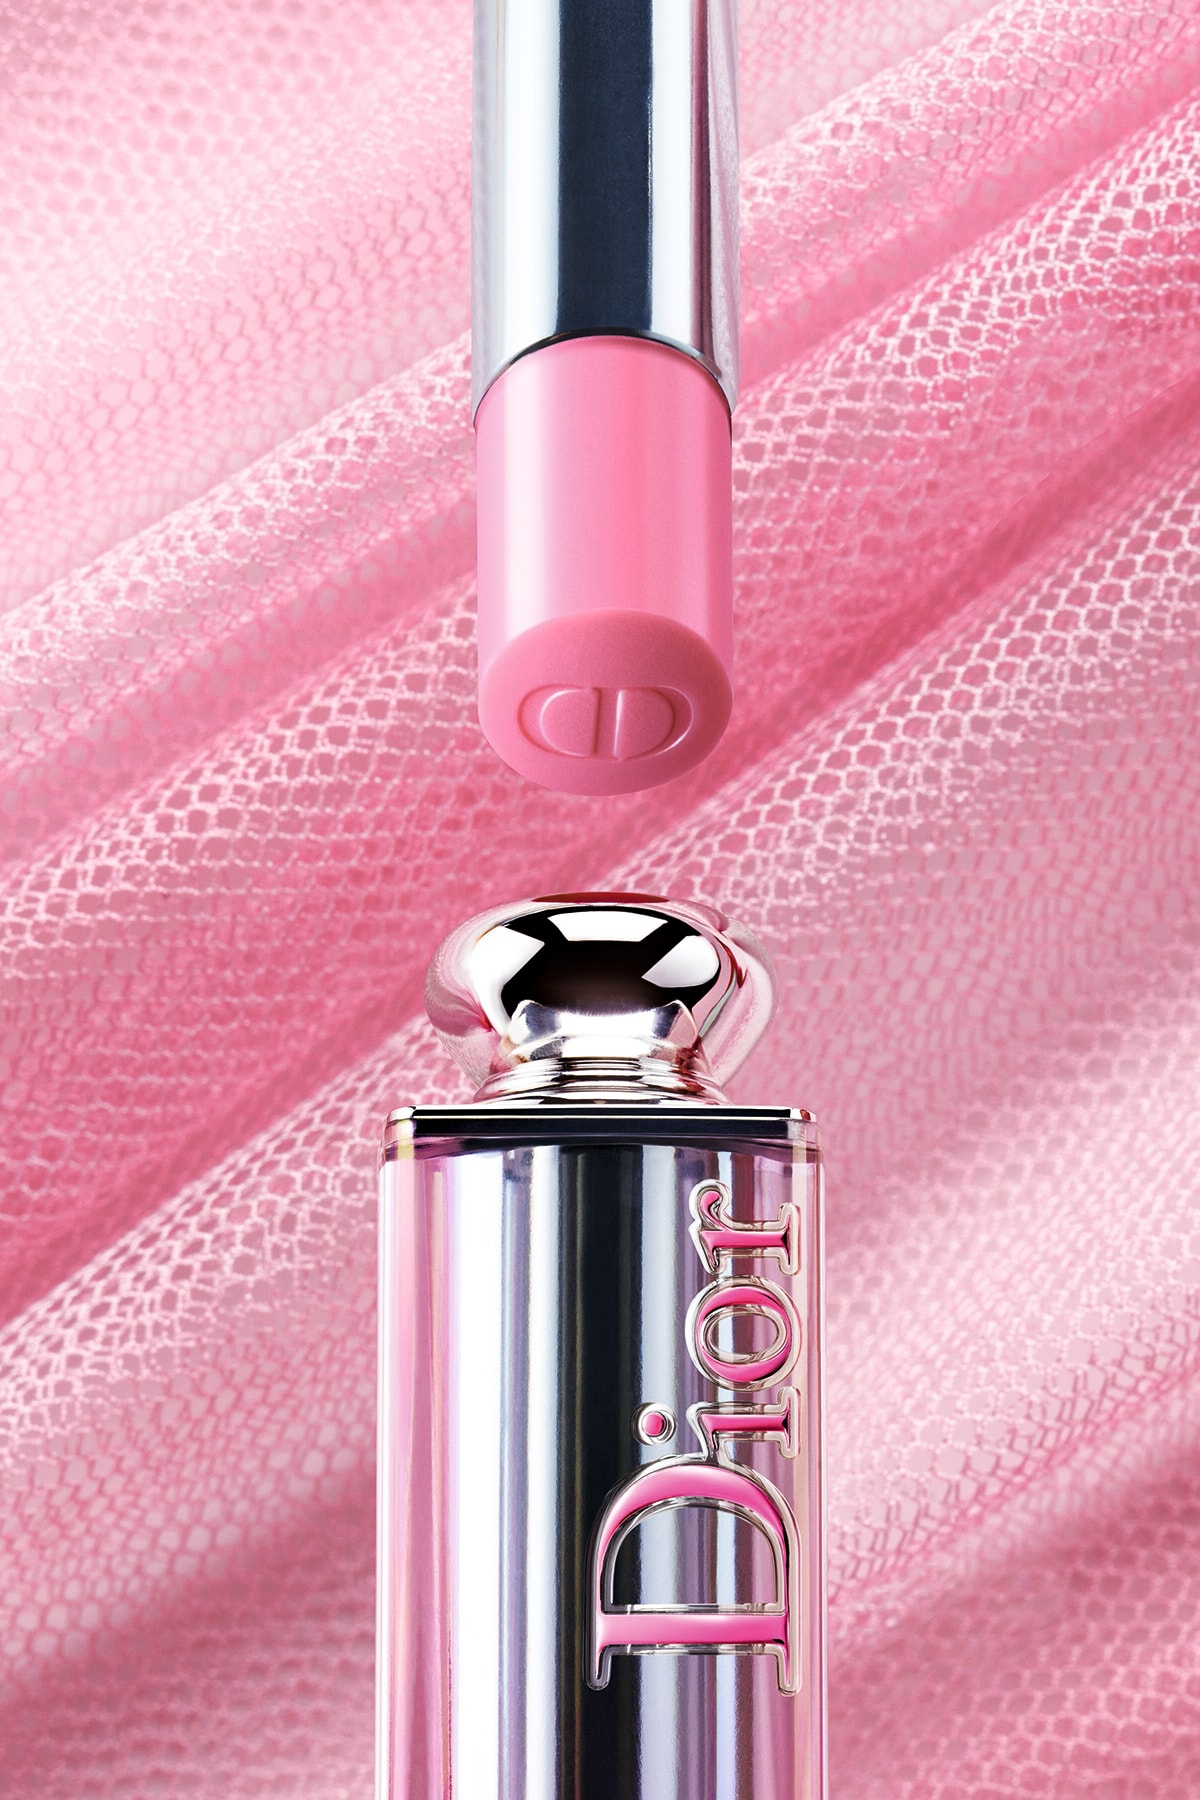 Dior Beauty Addict Stellar Shine Lipstick Couture Shades Pink